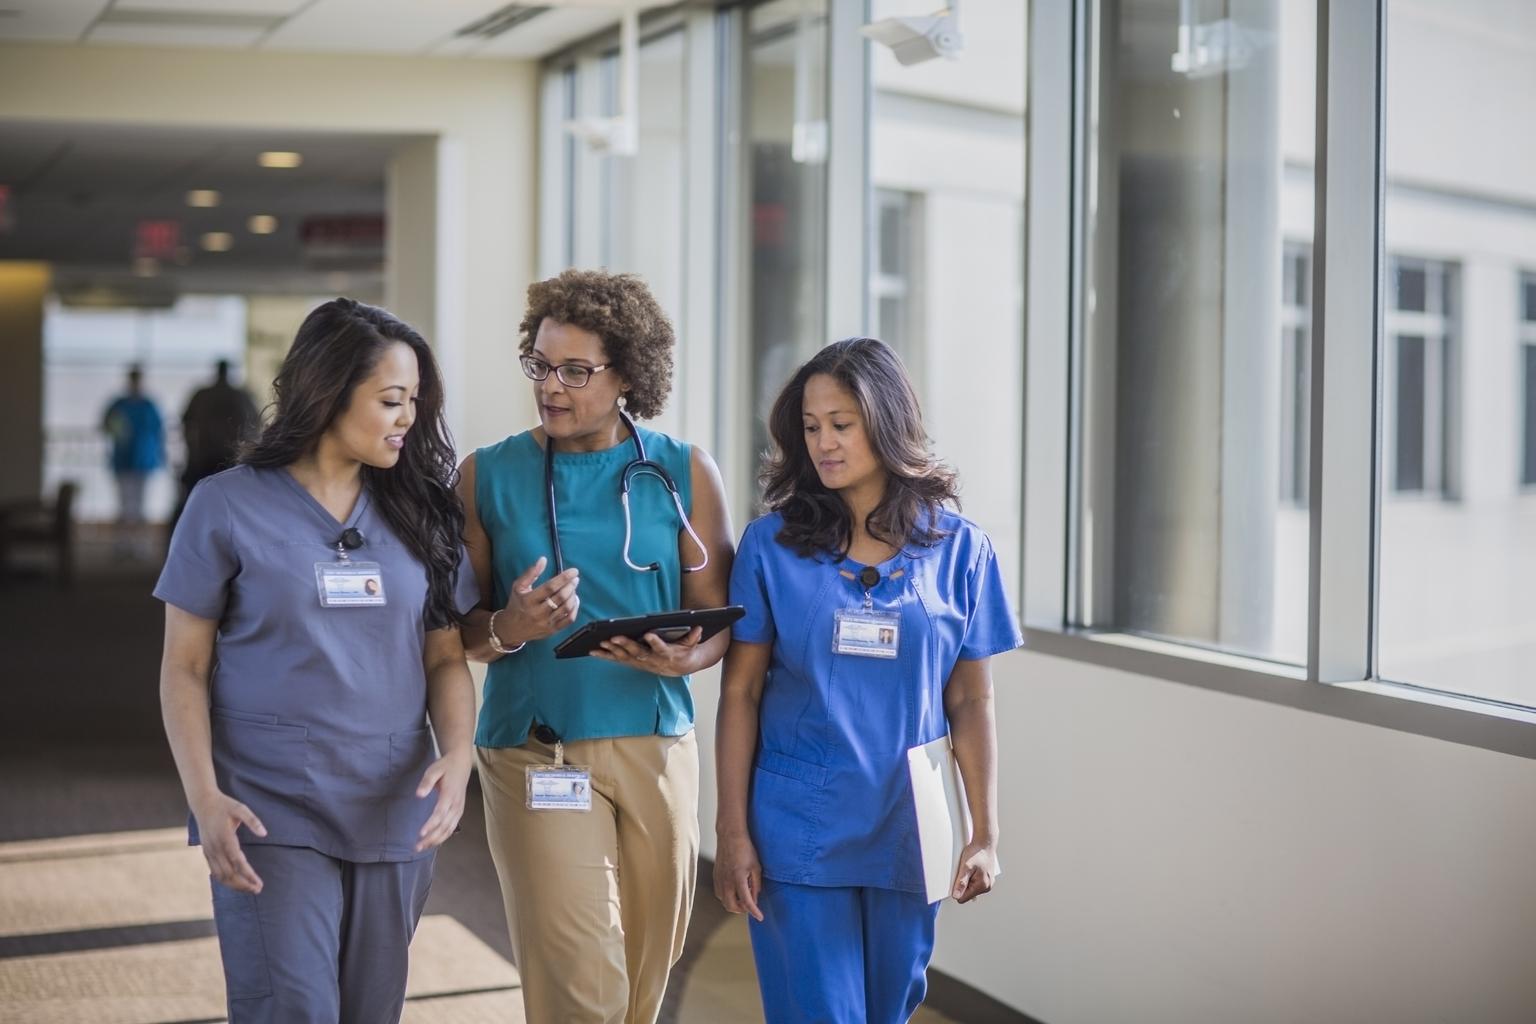 Nurse administrator and two new nurses walking through hospital cooridor, talking informally